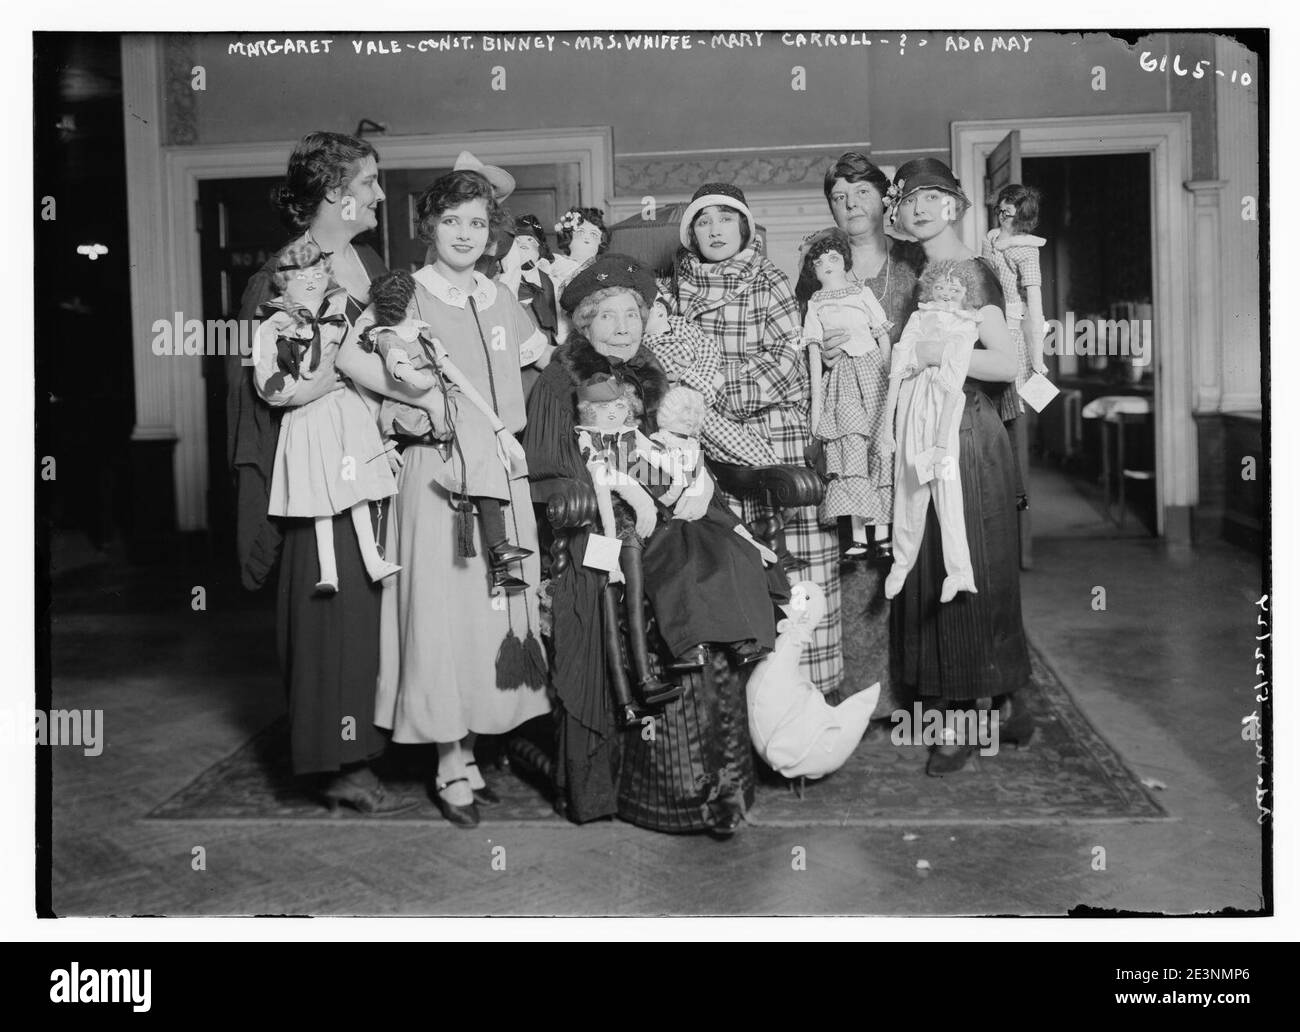 Margaret Vale, Const. Binney, Mrs. Whiffen, Mary Carroll, Ada Mary Stock Photo